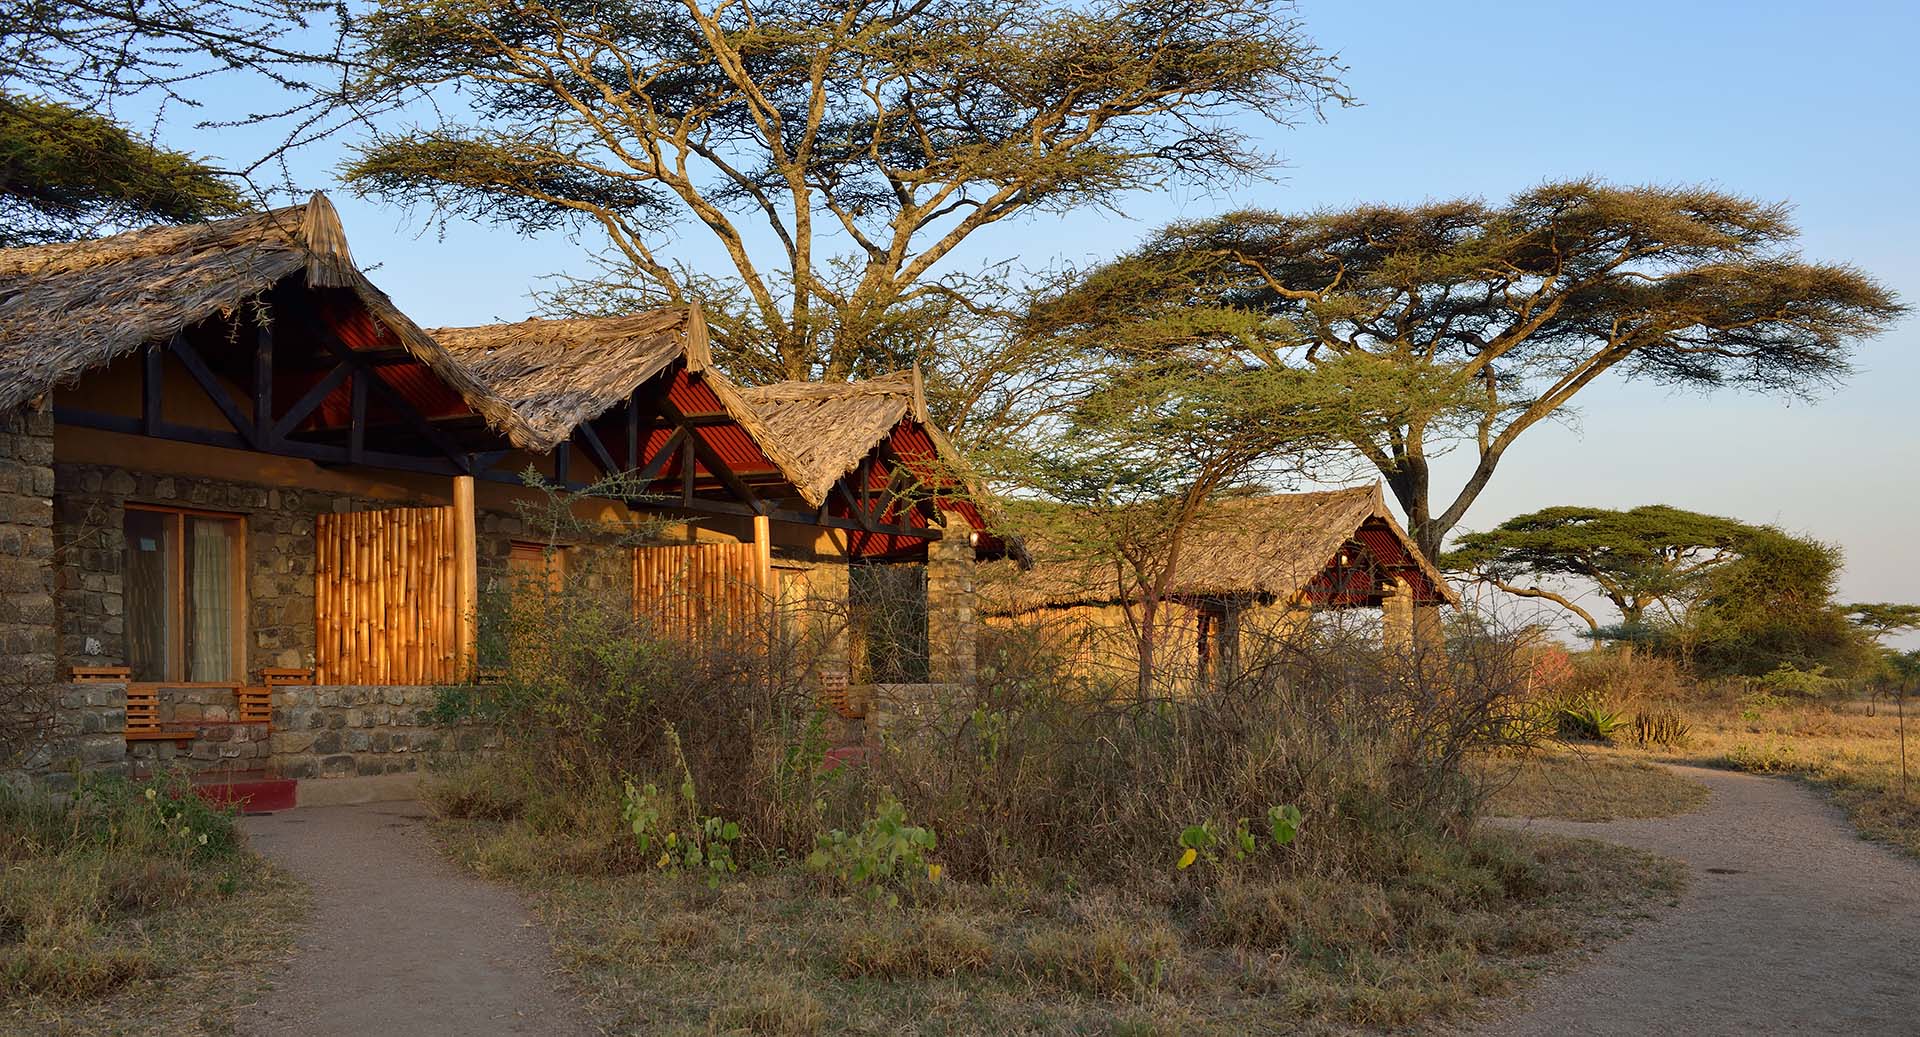 De accommodaties van de Ndutu Safari Lodge, Ngorogoro Conservation Area, Tanzania.